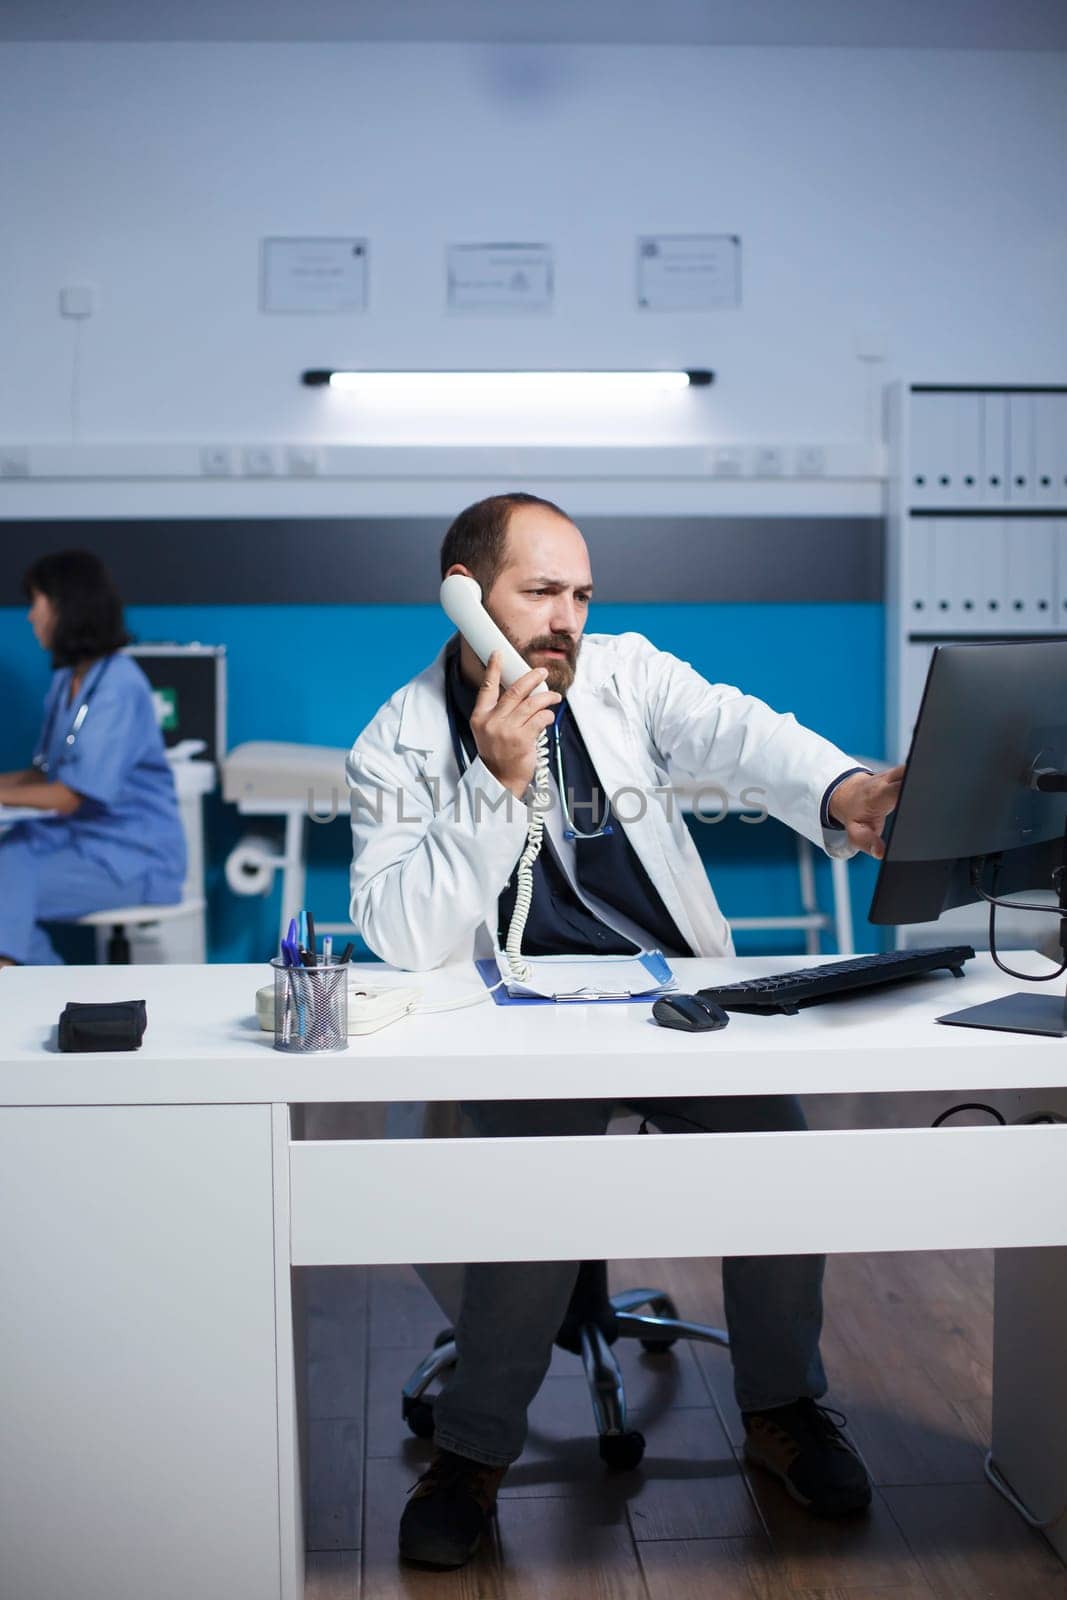 Physician using a landline phone by DCStudio